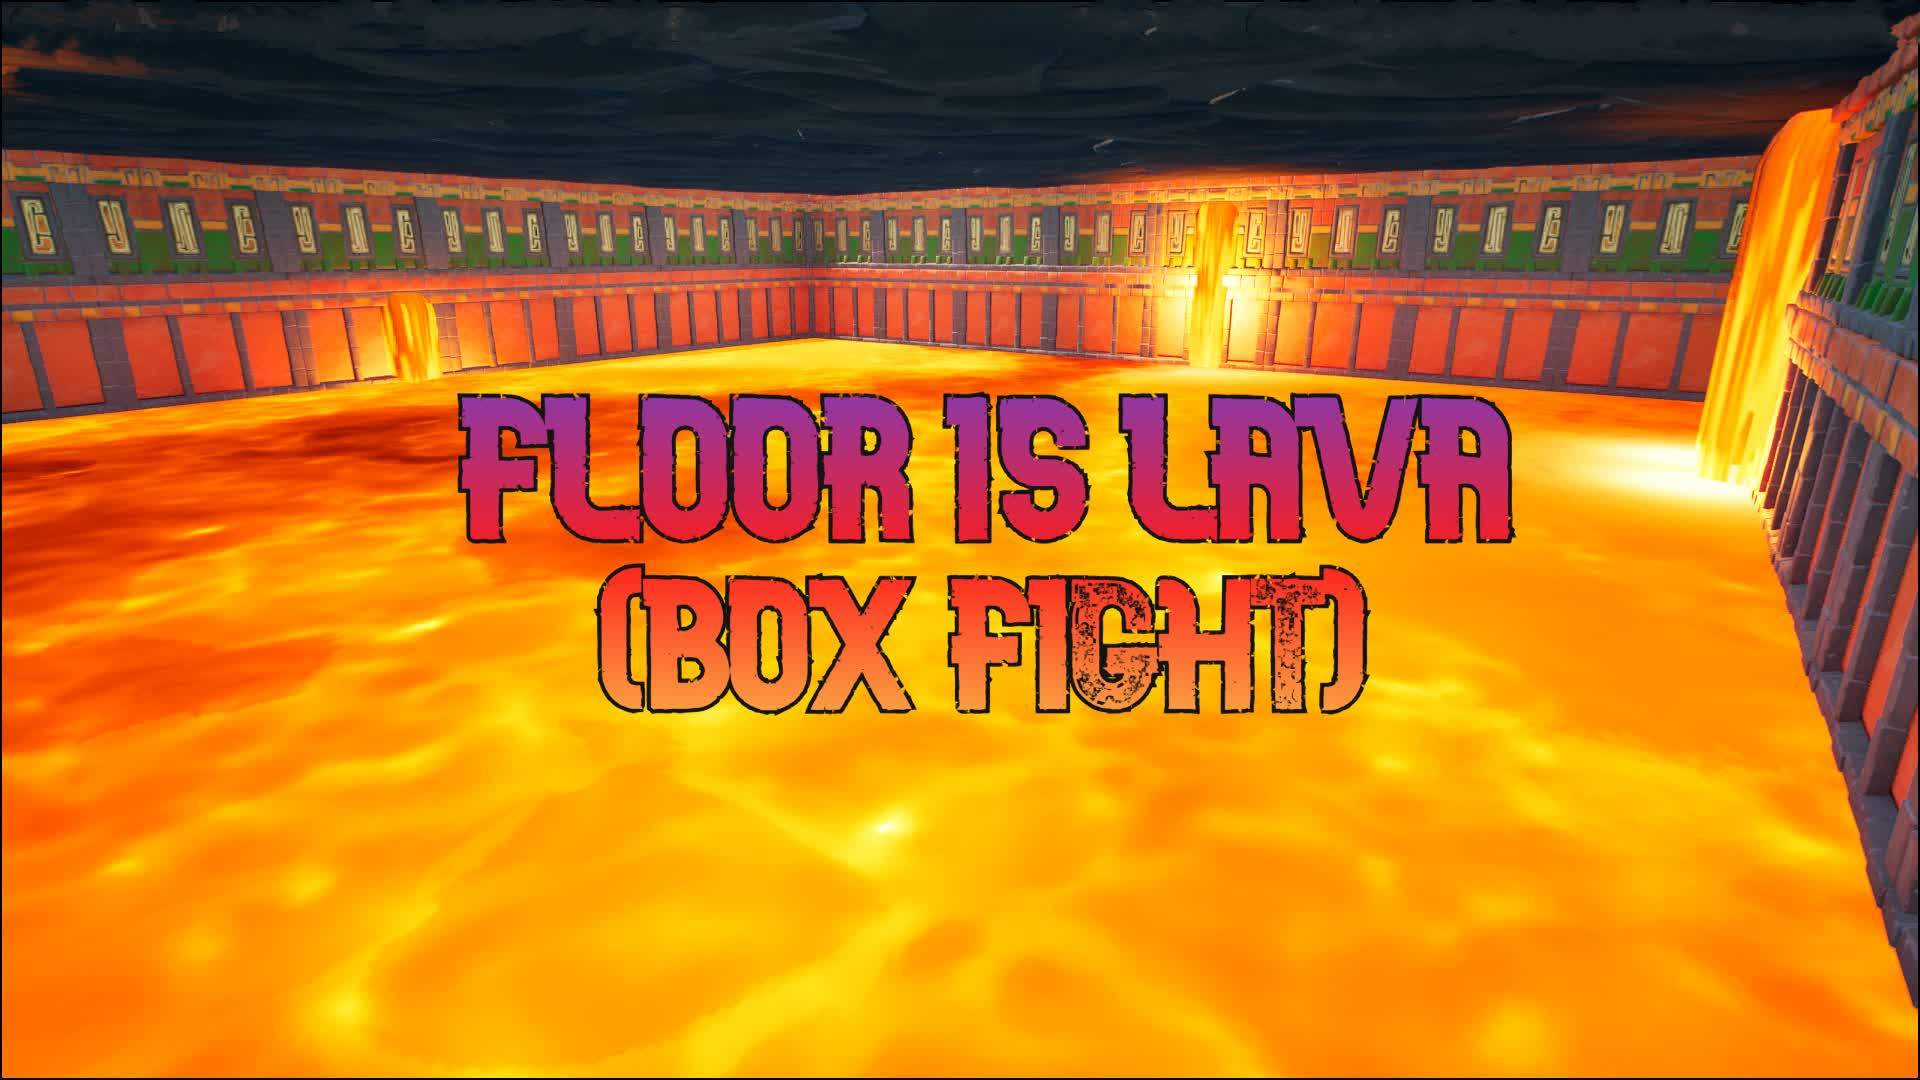 Floor Is Lava! box fights